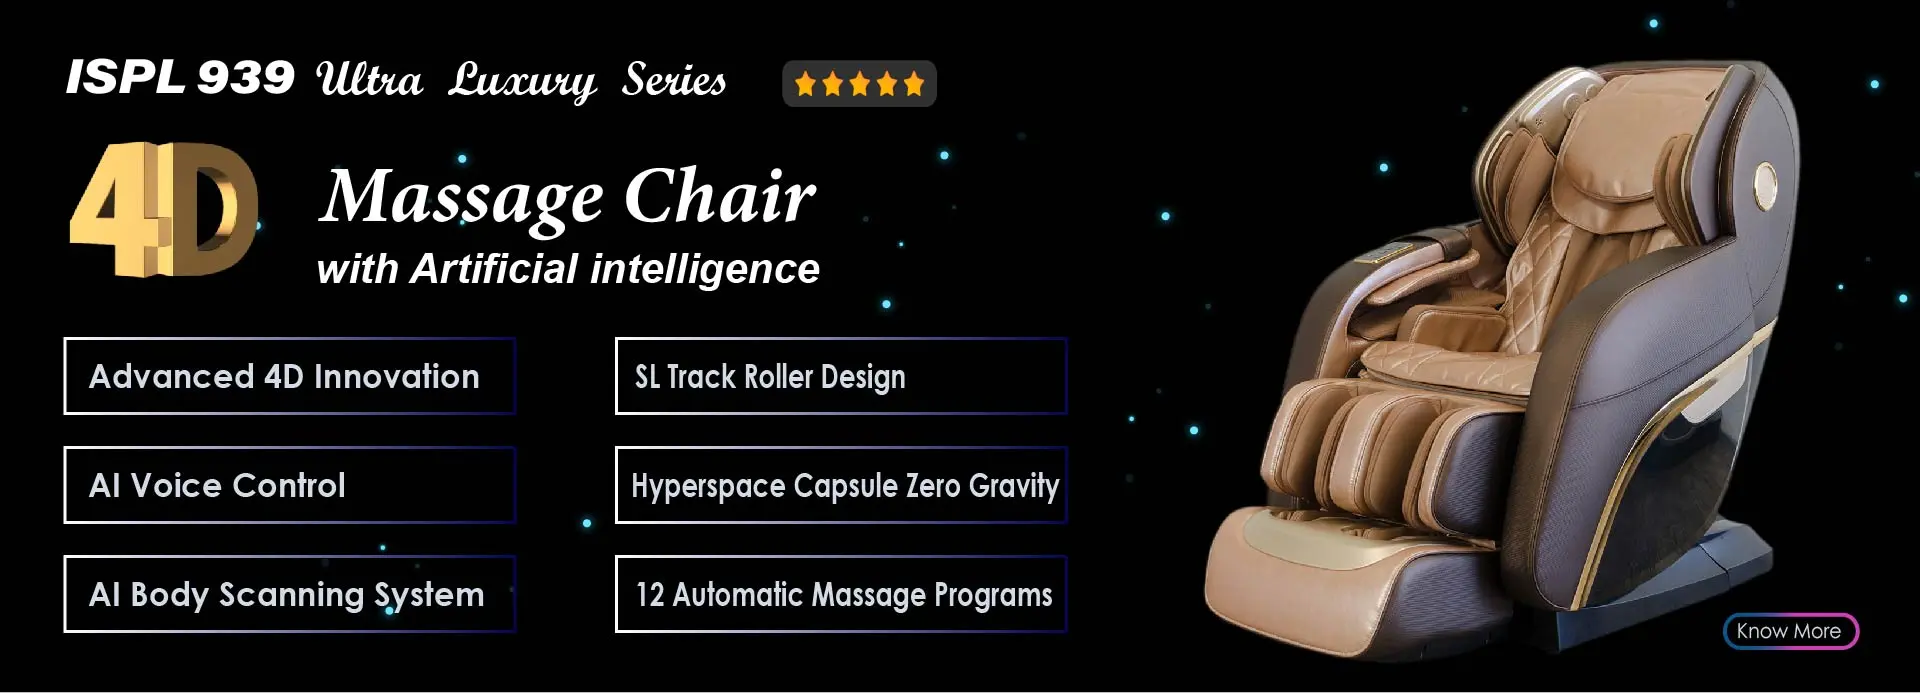 ISPL 939 4D Massage Chairs